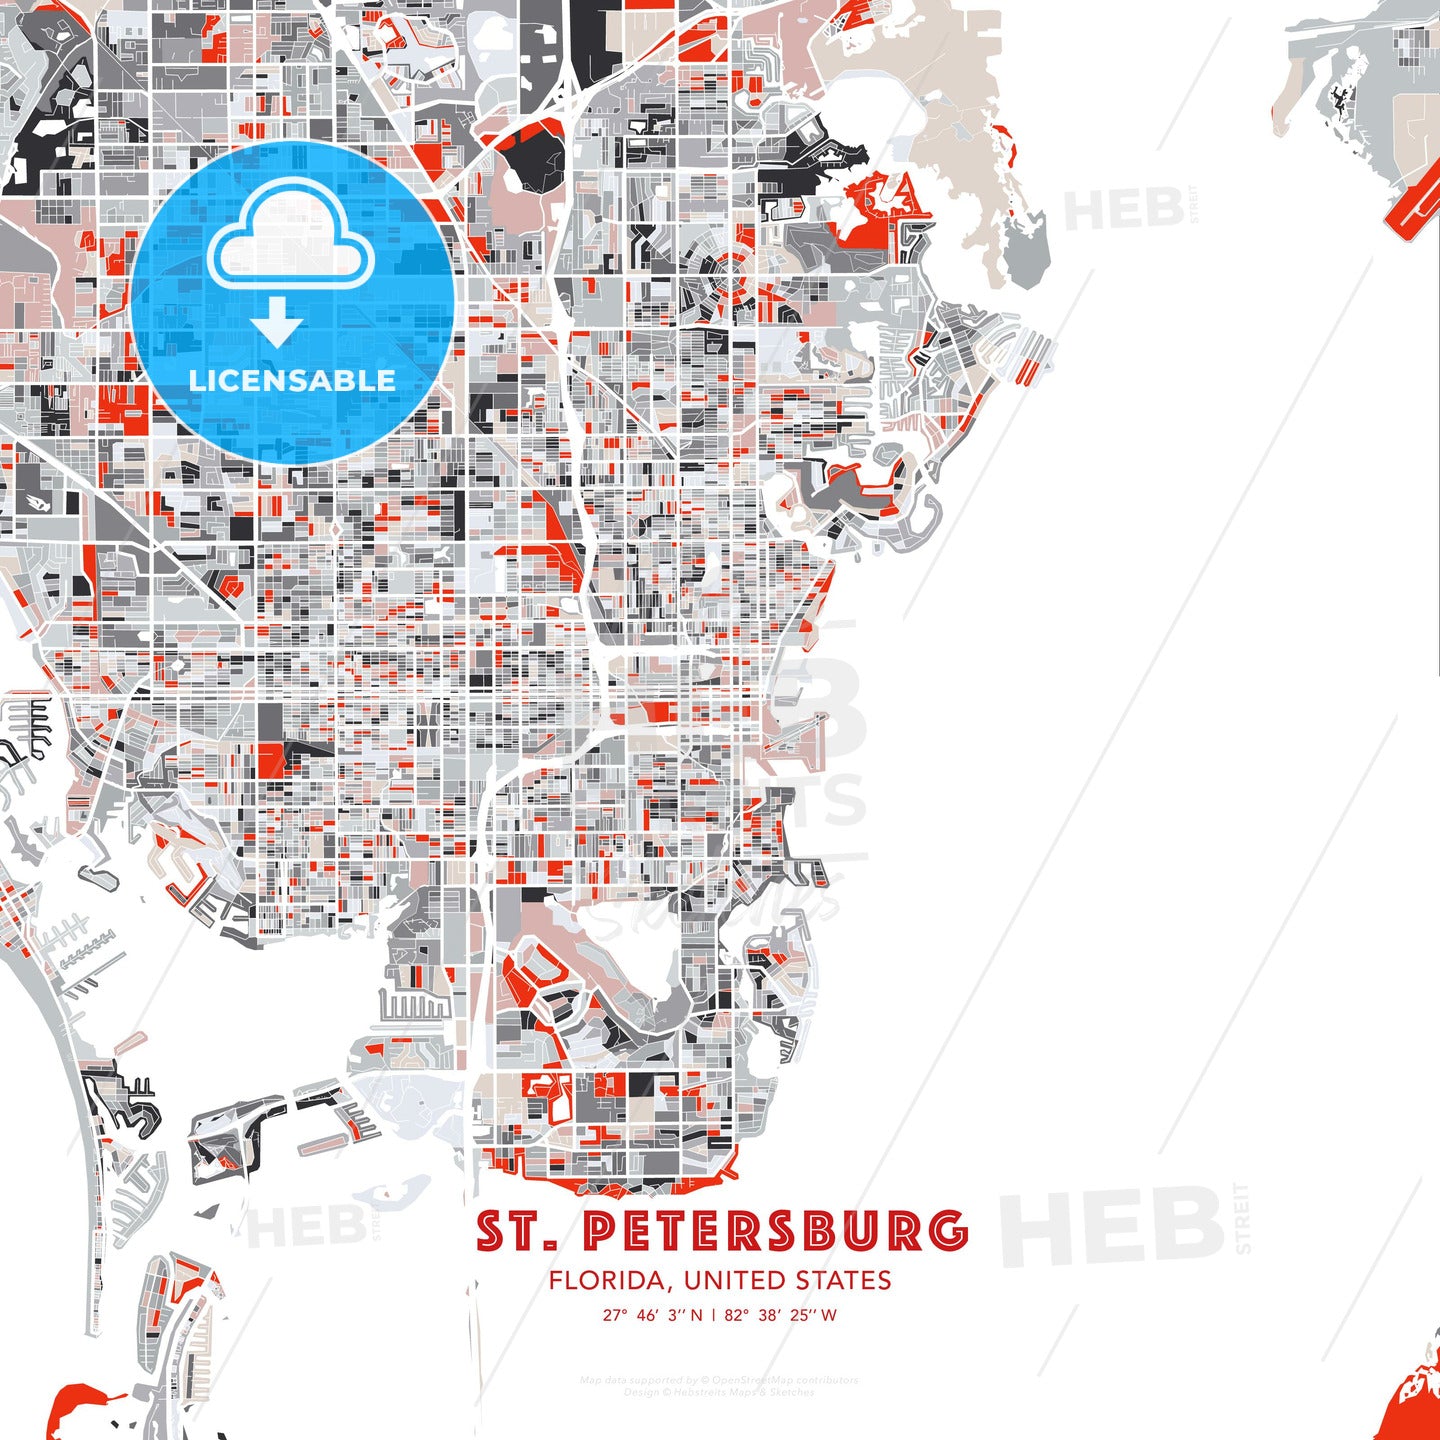 St. Petersburg, Florida, United States, modern map - HEBSTREITS Sketches